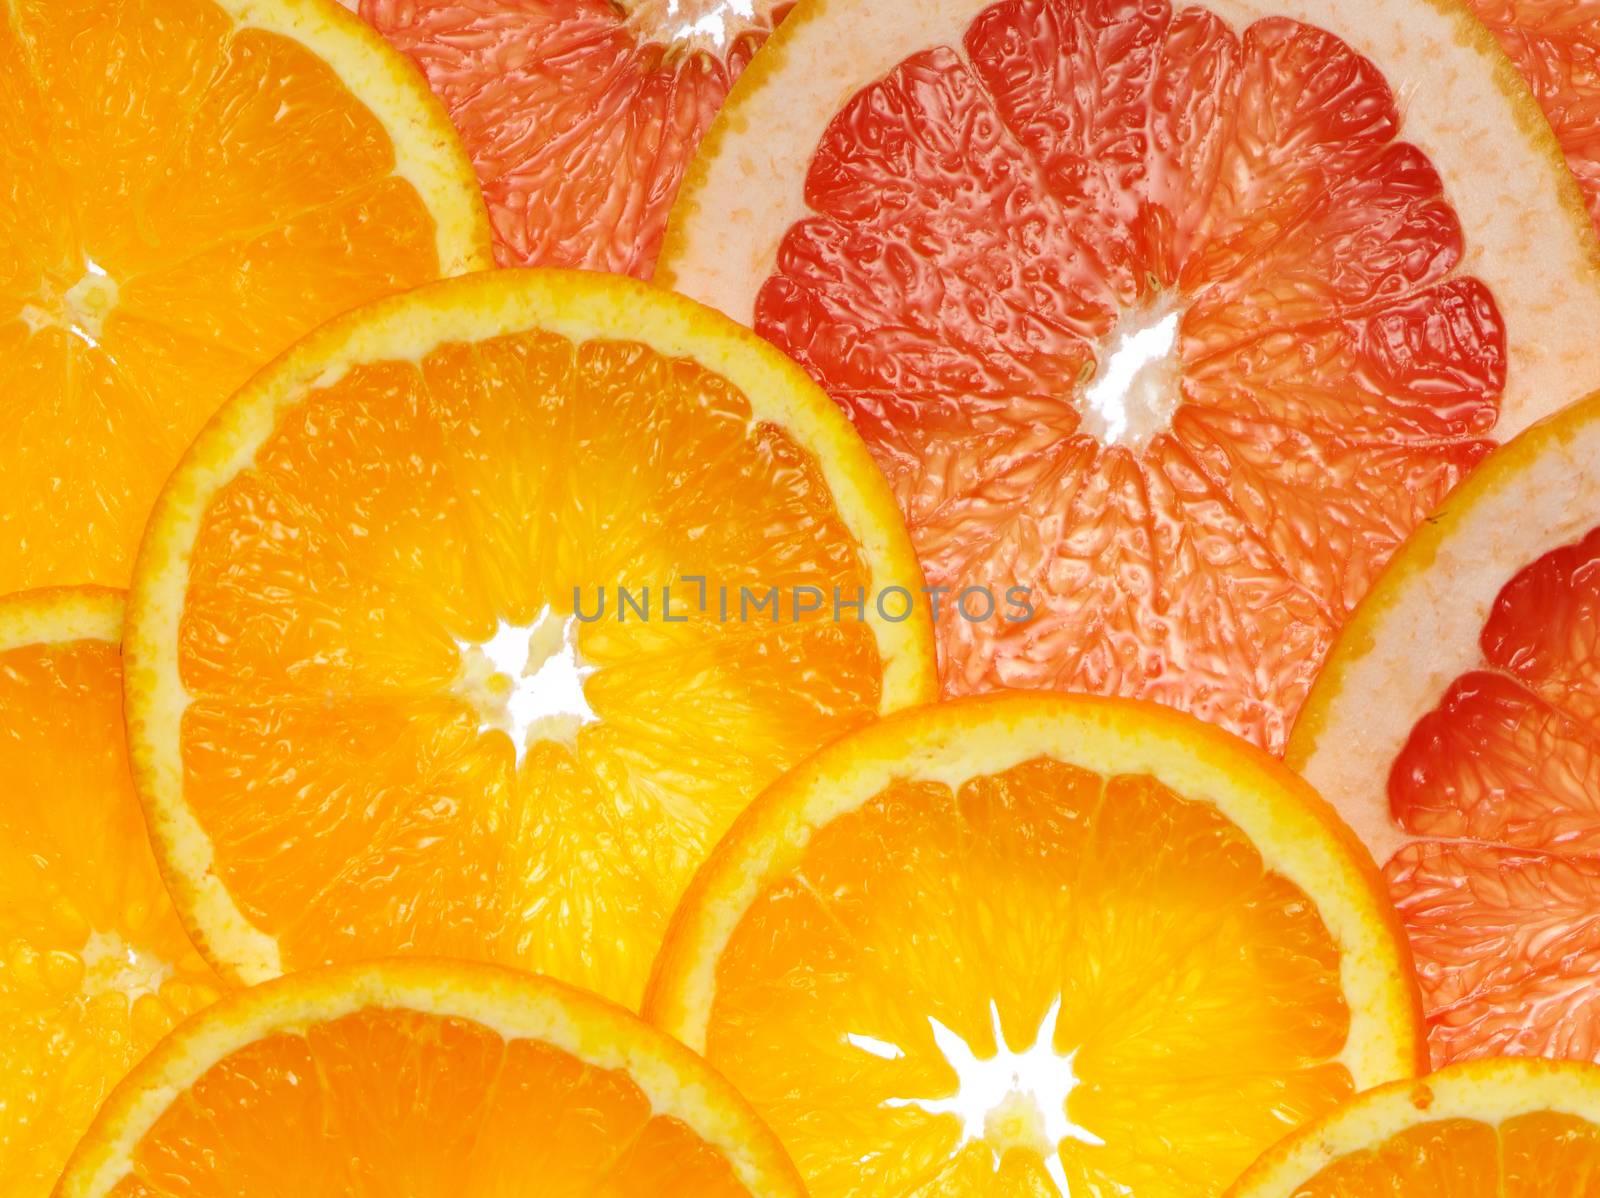 sweet and juicy sliced orange and grapefruit